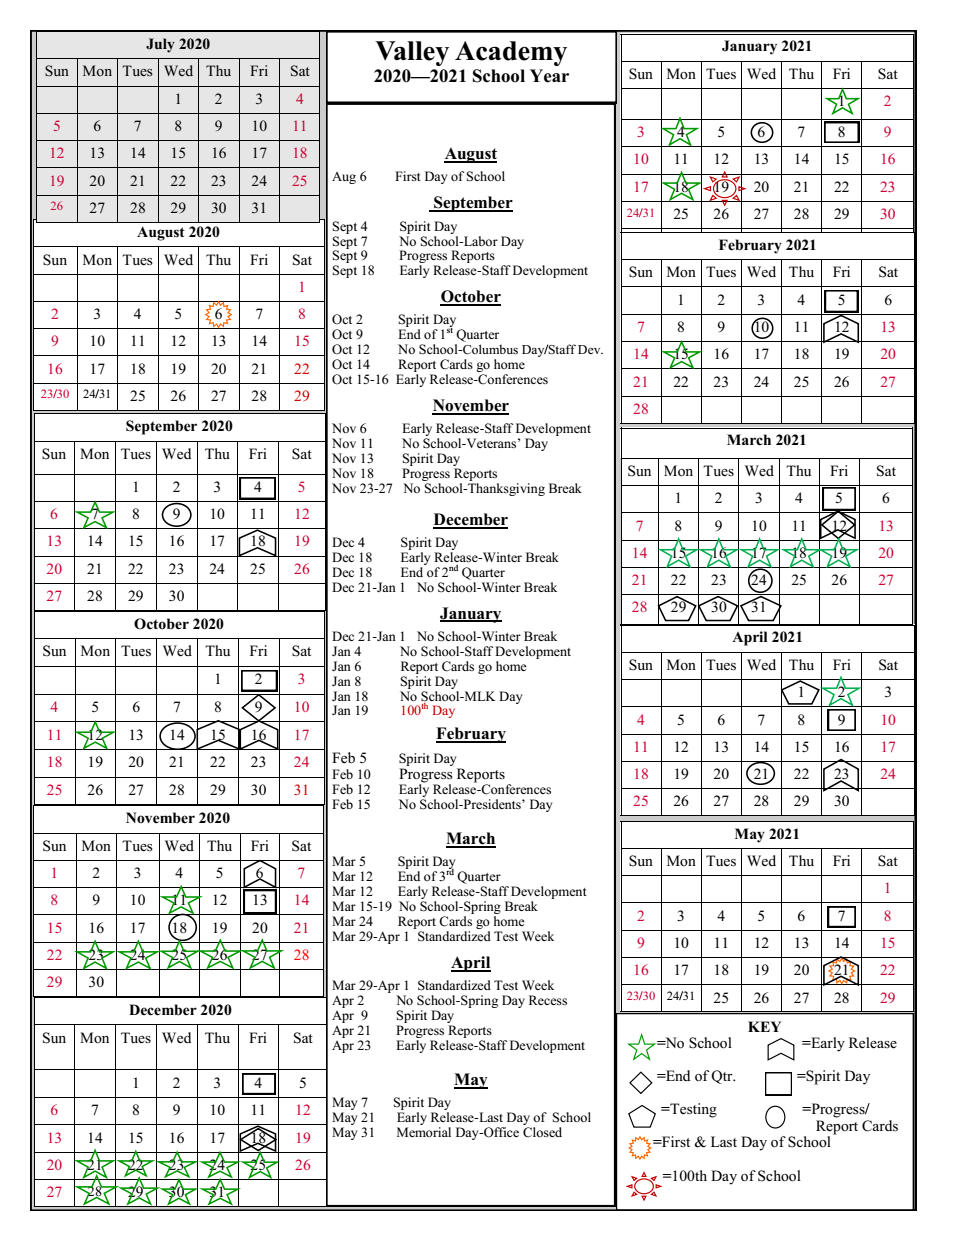 Va One Page Calendar 2020-2021 Rev061820 | Valley Academy